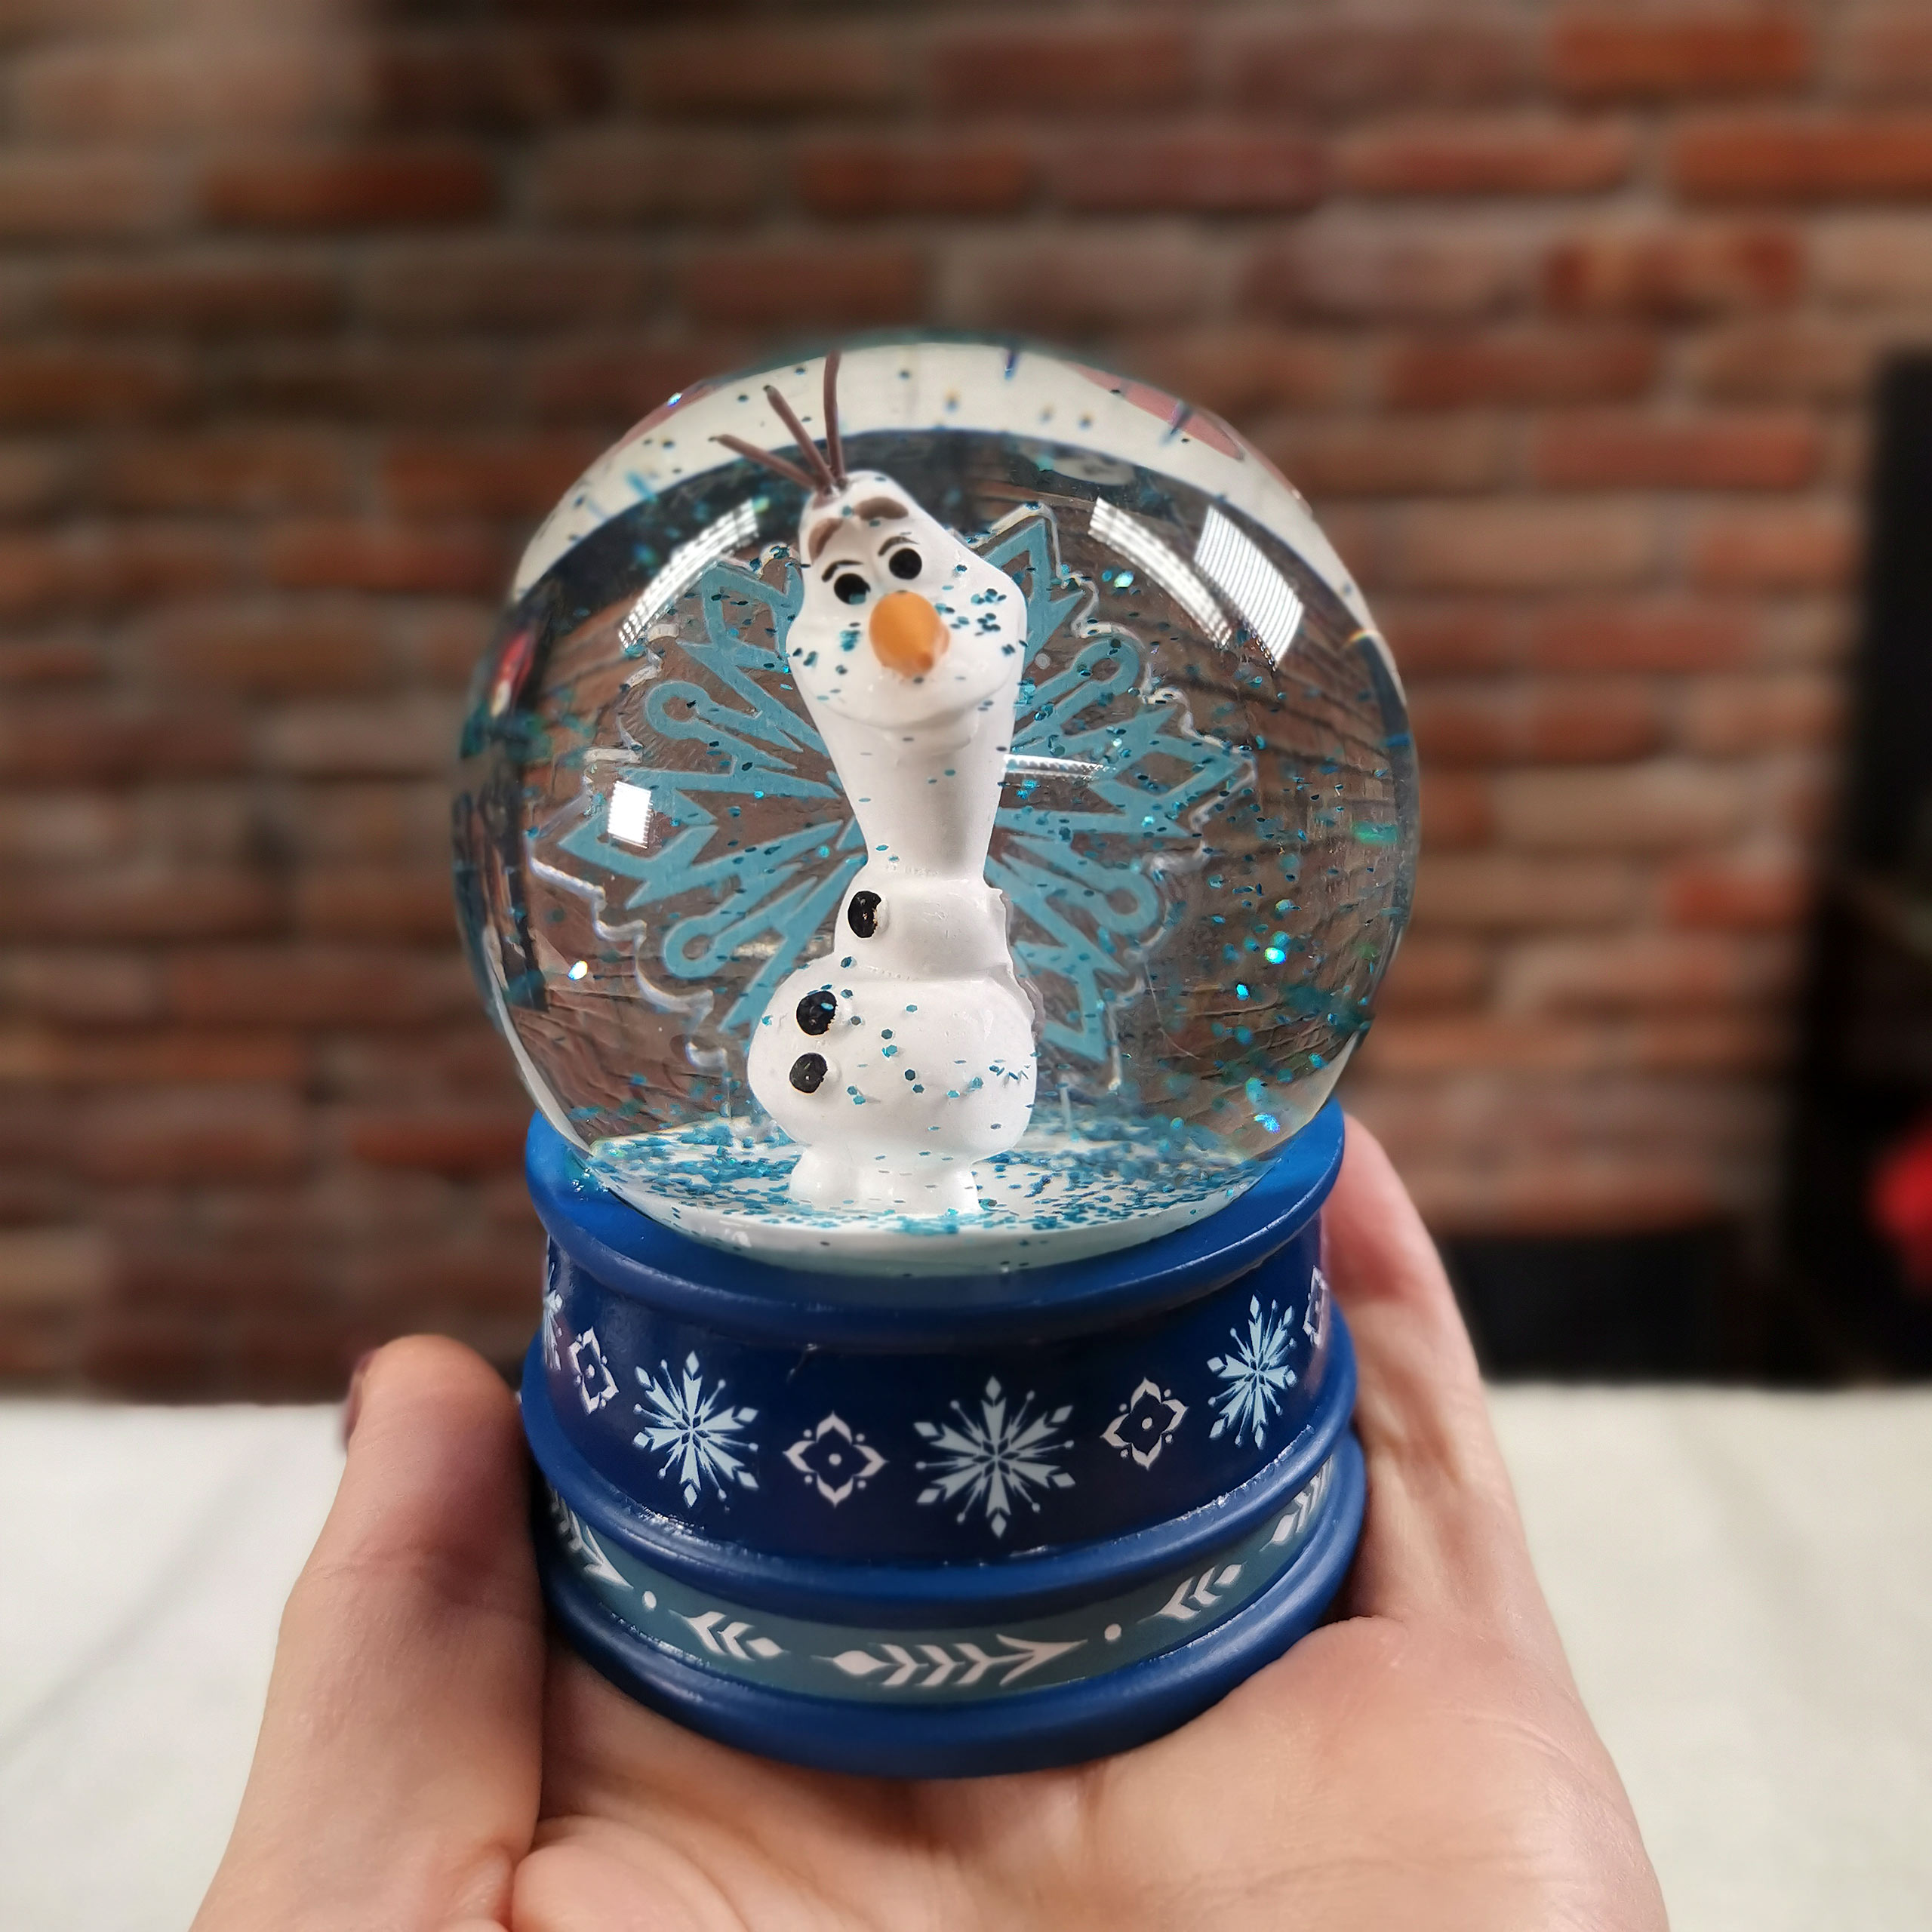 Frozen - Olaf Snow Globe with Glitter